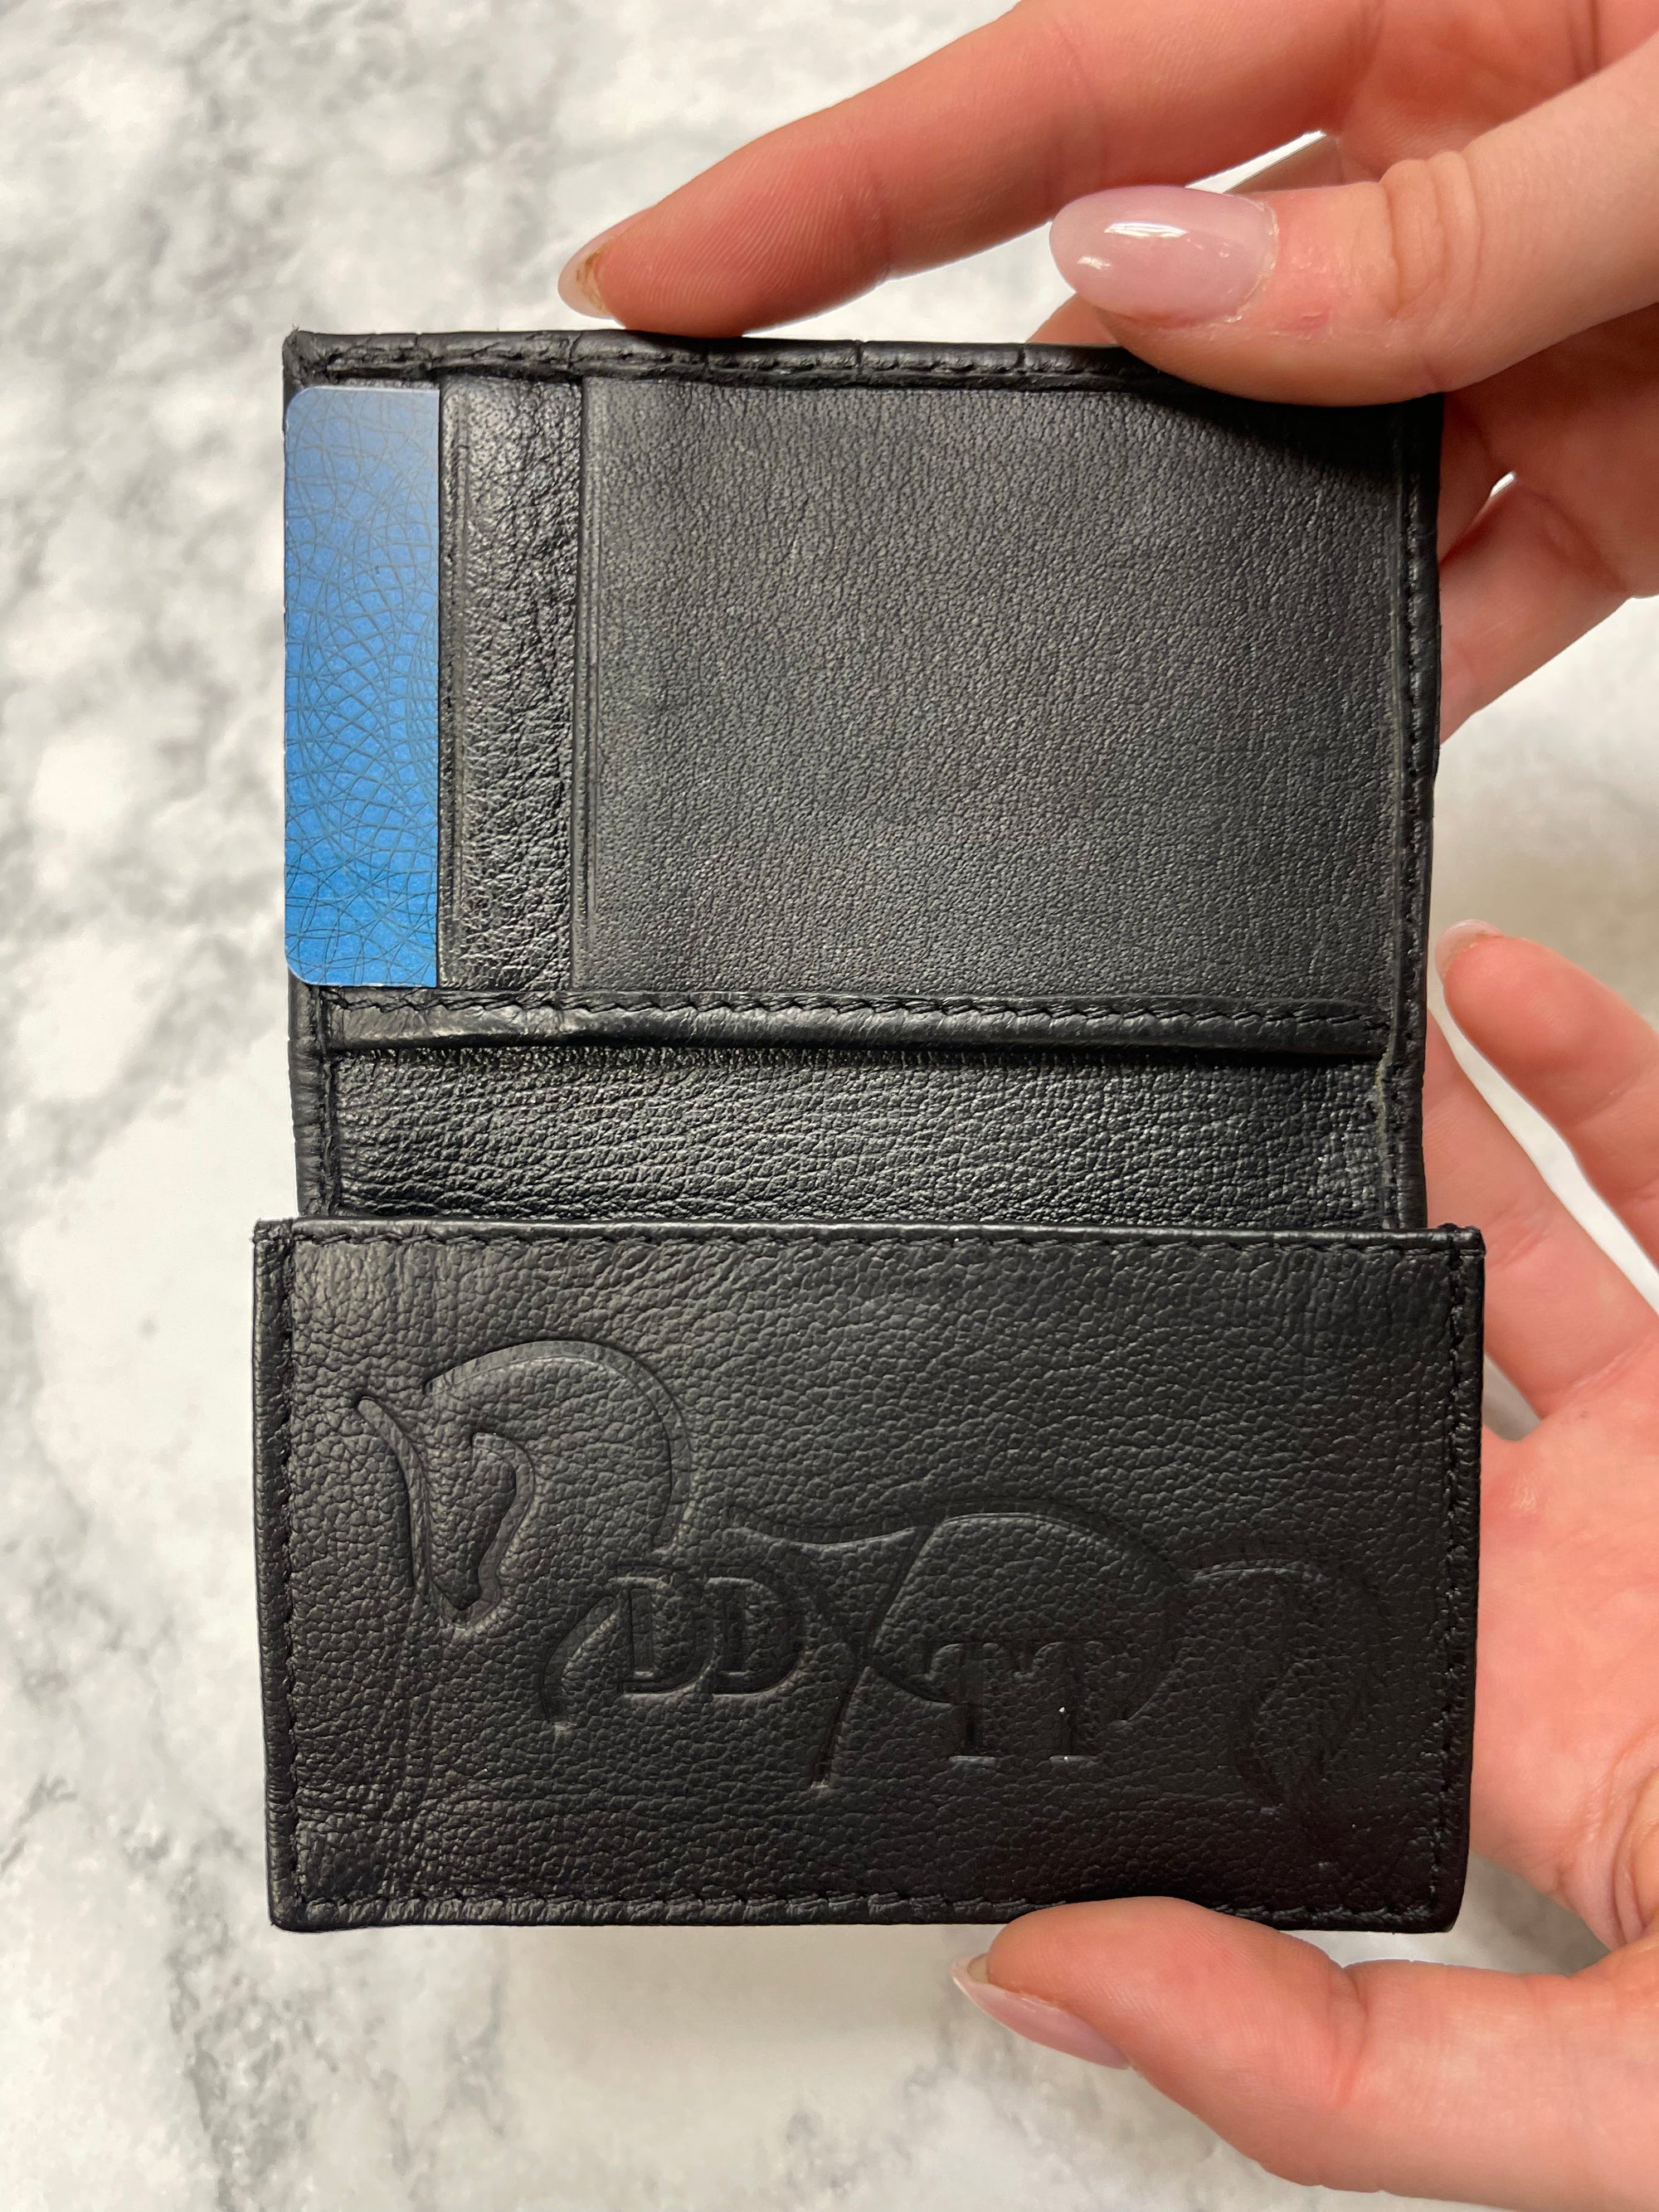 Credit Card Holder - Ostrich Shin Leather - Minimalist Wallet Olive